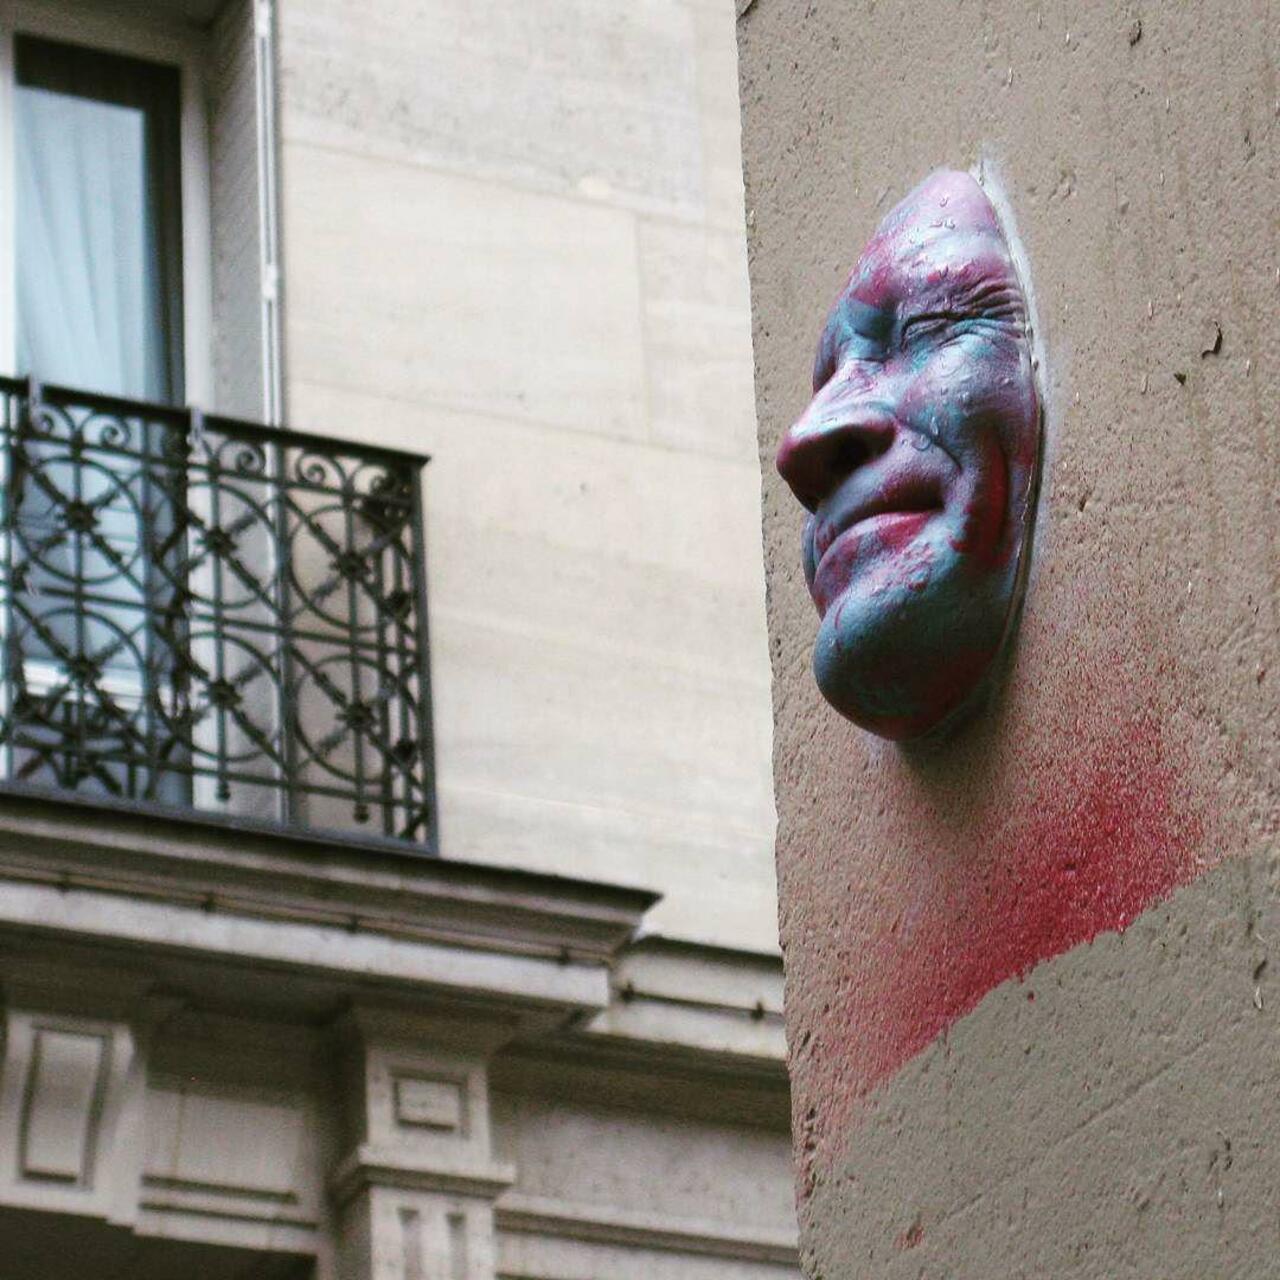 #Paris #graffiti photo by @rosborkowska http://ift.tt/1gWOVvM #StreetArt http://t.co/3DYzgBNDuY